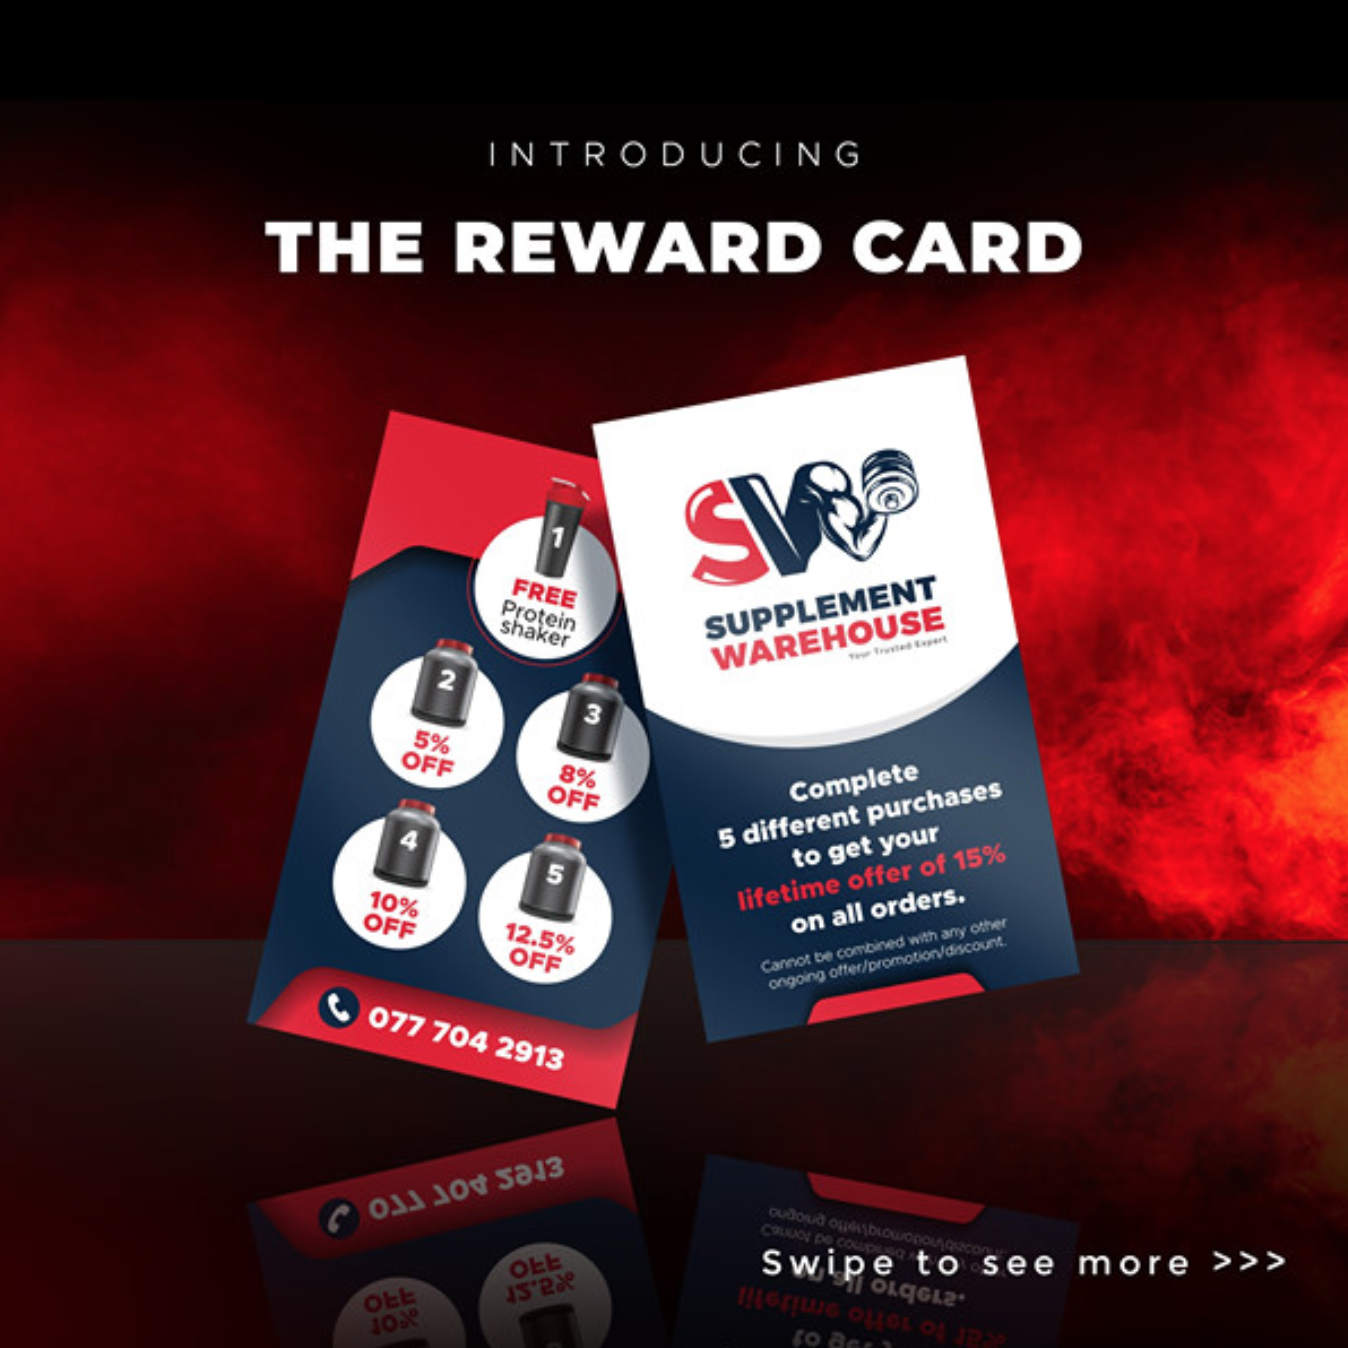 Supplement Warehouse Reward Card Promotion